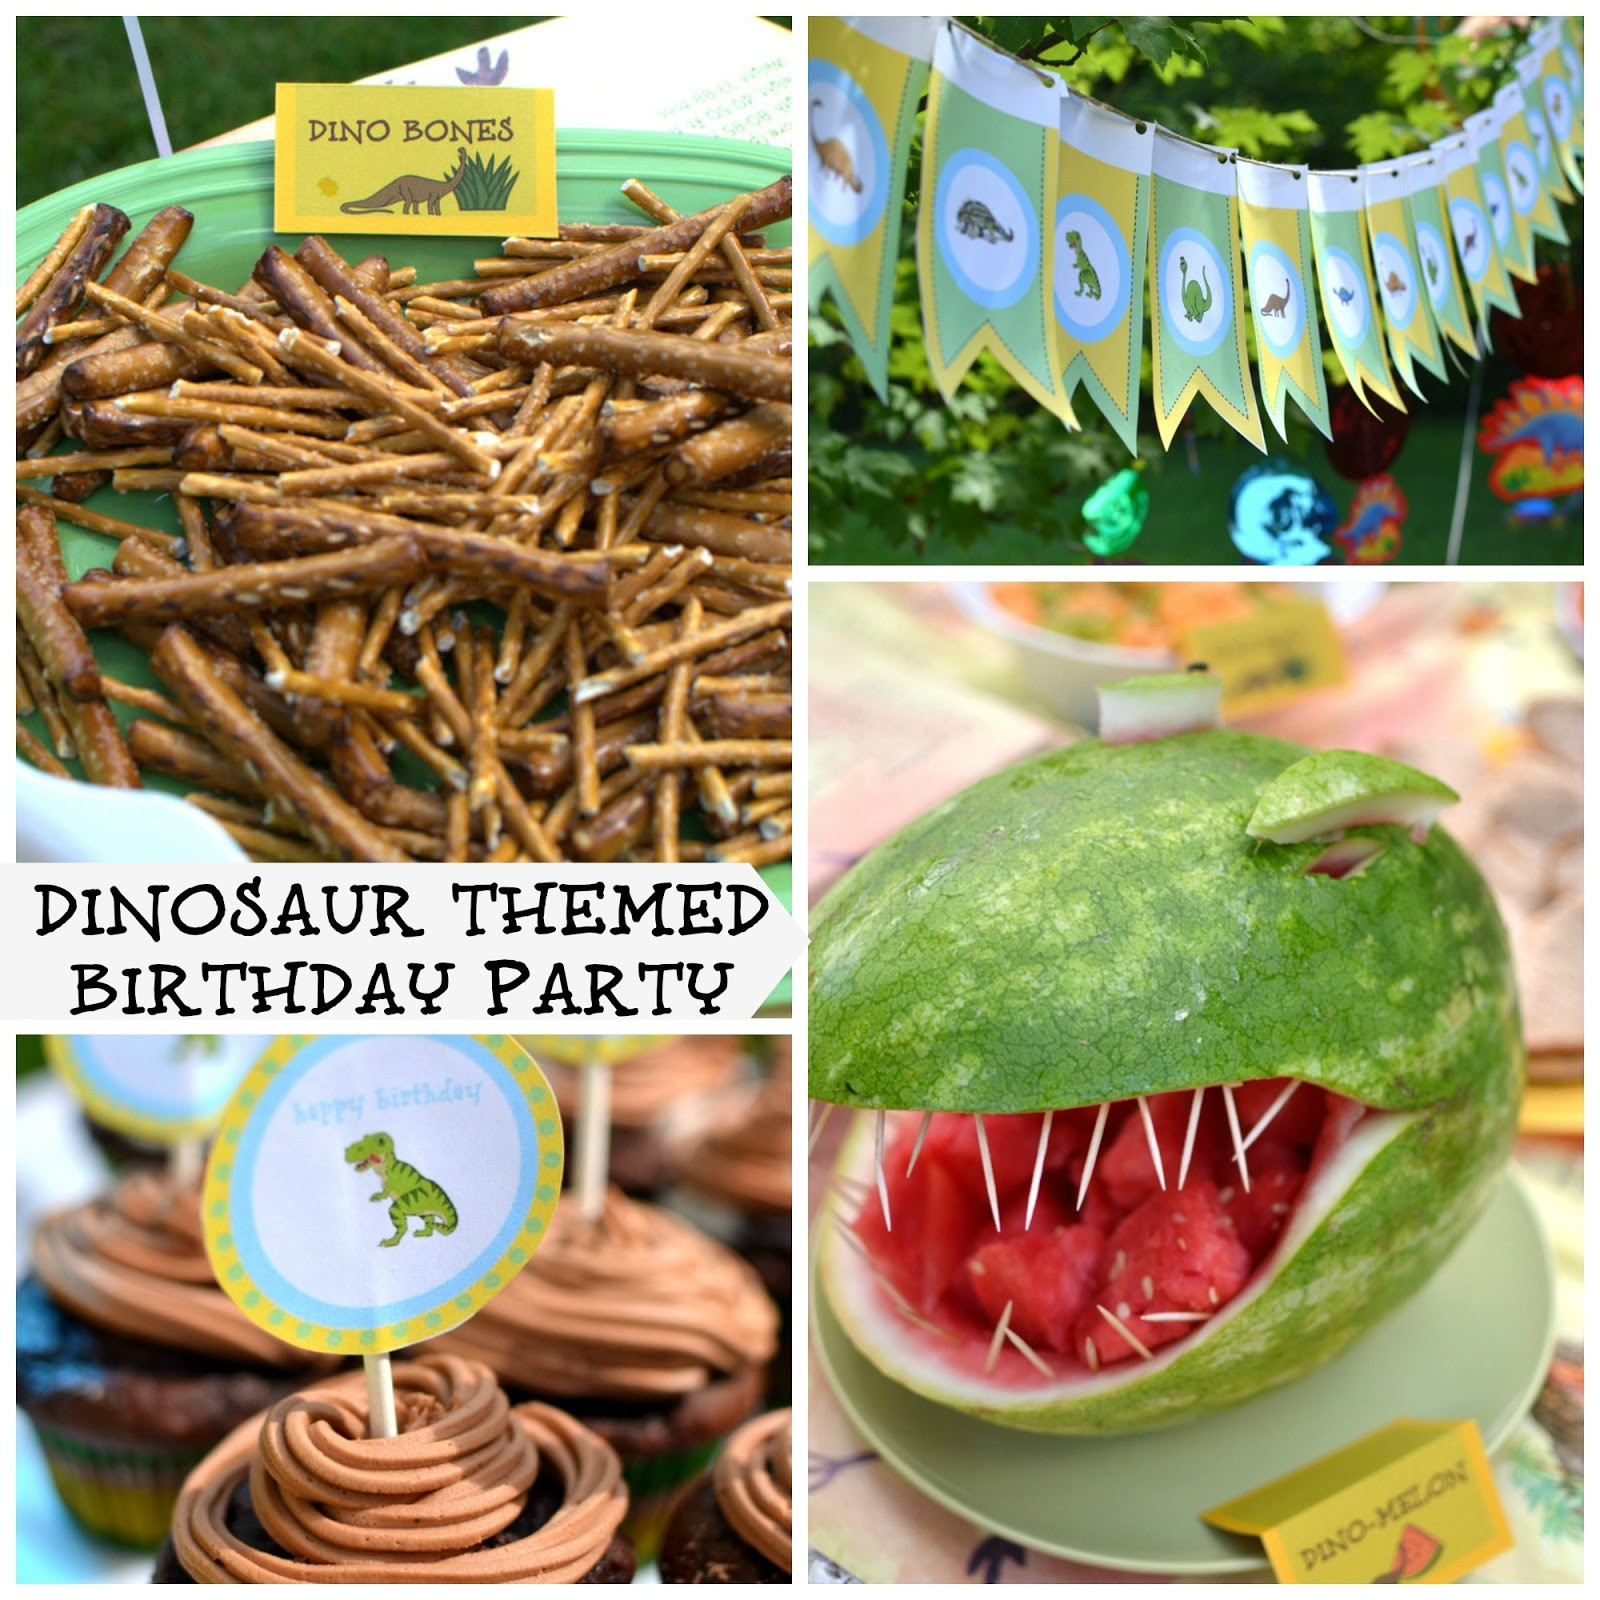 Dinosaur Birthday Party Menu Ideas
 Party with dinosaurs Dinosaur themed birthday party